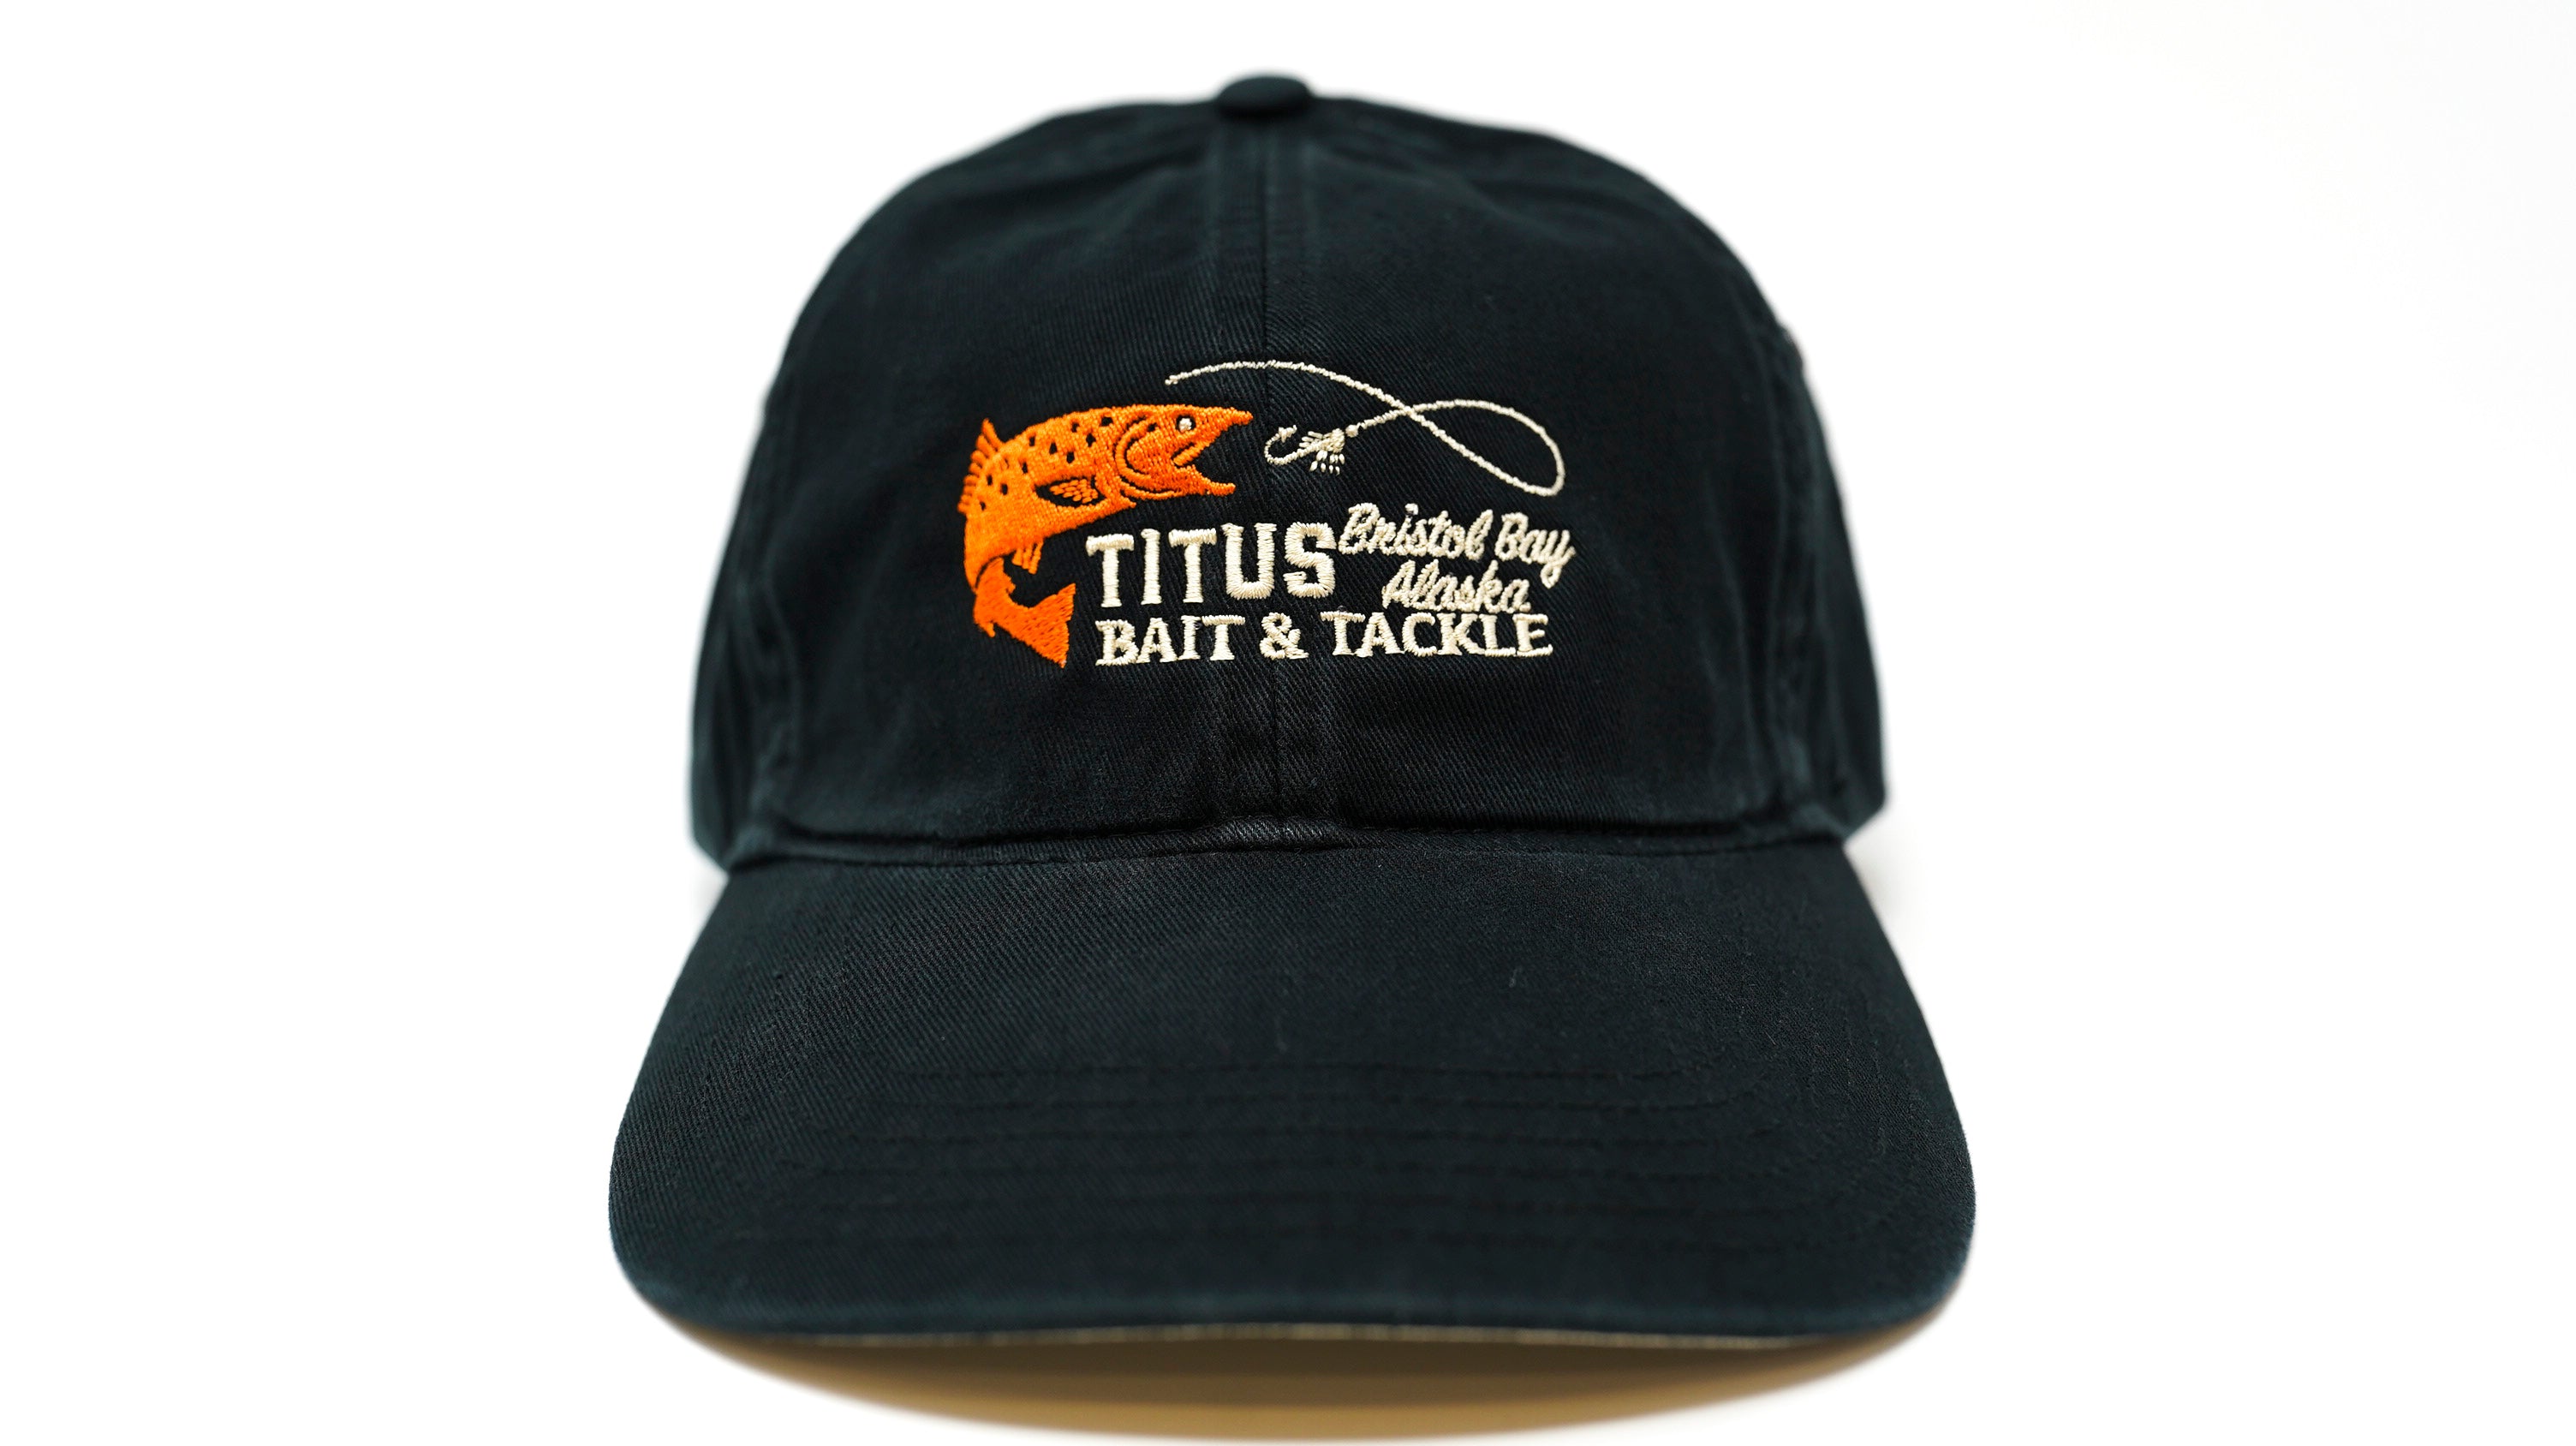 Image of Titus Bristol Bay Alaska Bait & Tackle hat